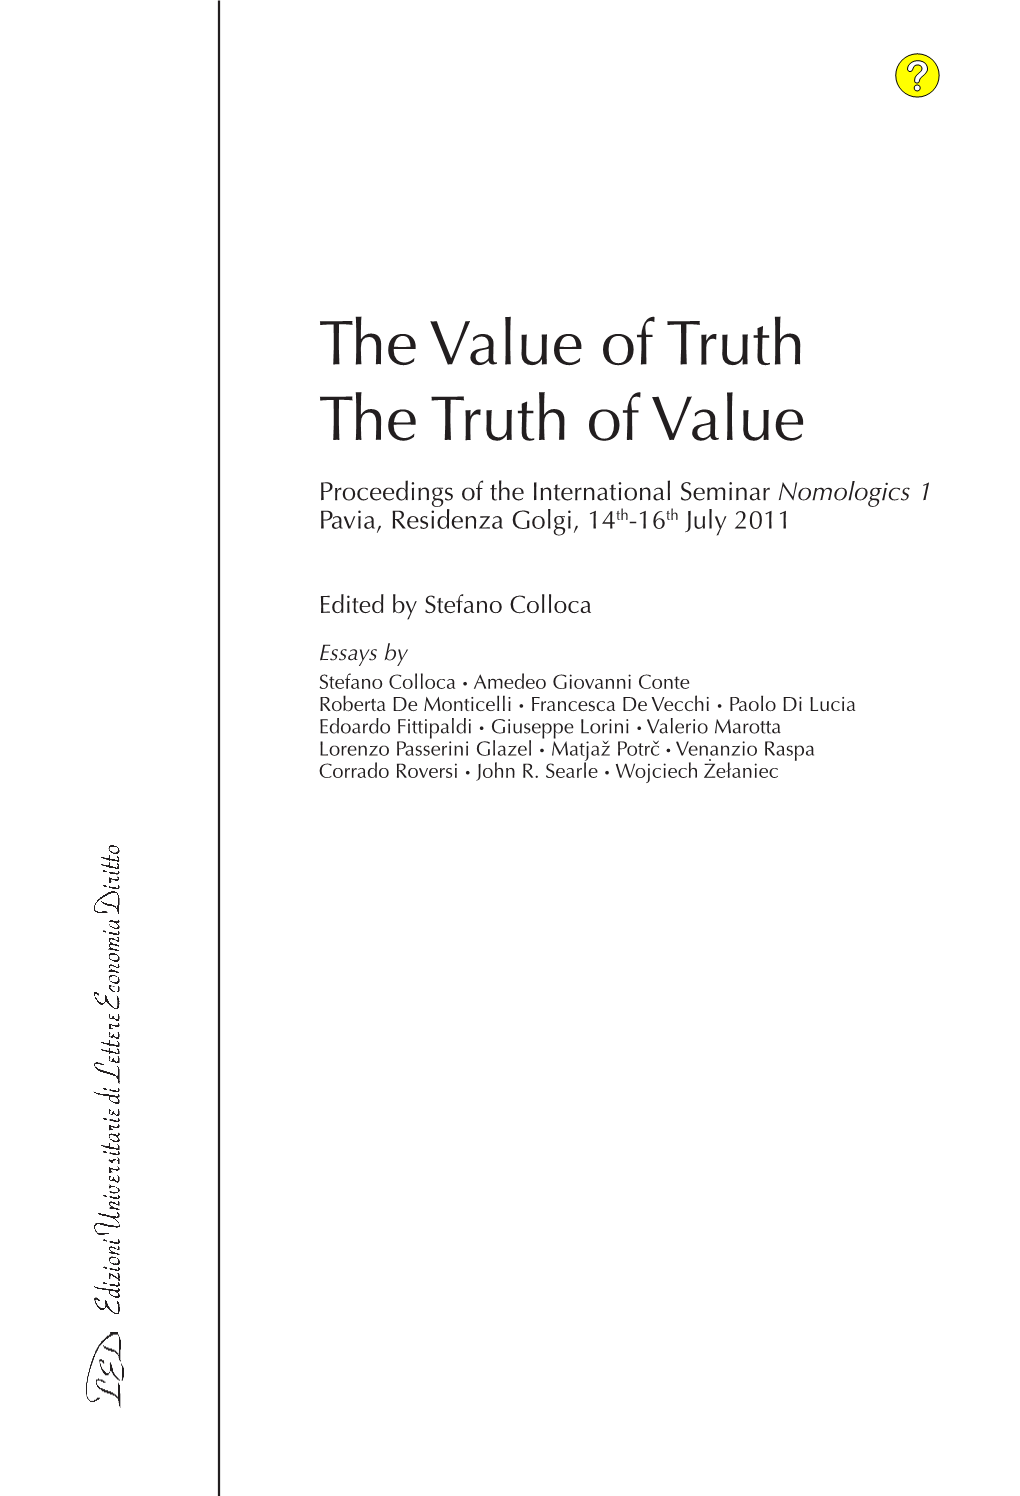 The Value of Truth the Truth of Value Proceedings of the International Seminar Nomologics 1 Pavia, Residenza Golgi, 14Th-16Th July 2011